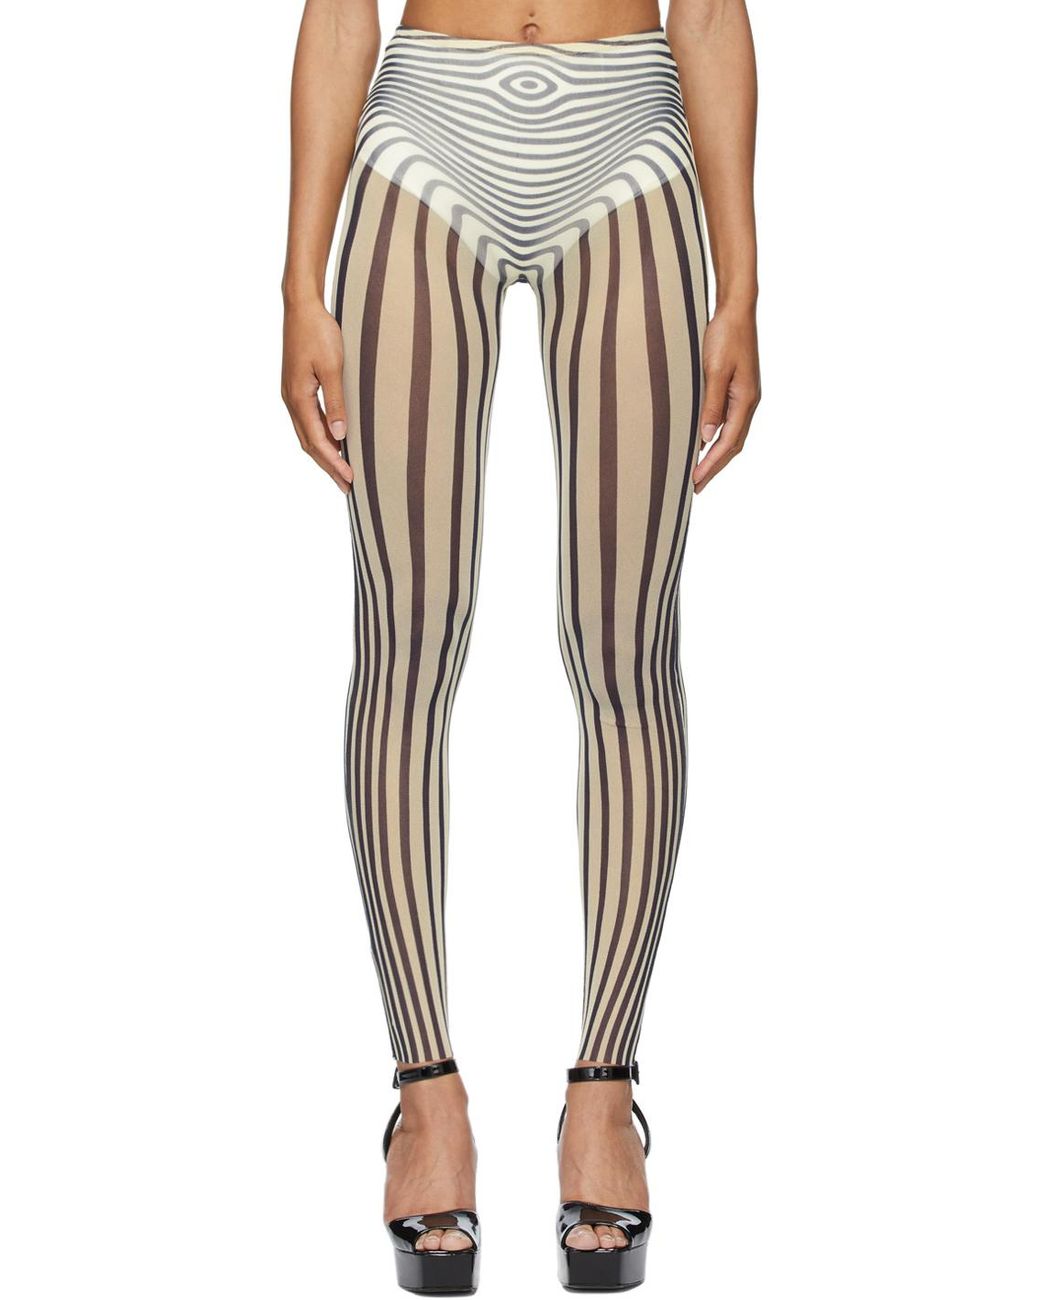 https://cdna.lystit.com/1040/1300/n/photos/ssense/8a249b92/jean-paul-gaultier-EcruMidnightB-Ssense-Exclusive-Off-Les-Marins-Body-Stripe-leggings.jpeg